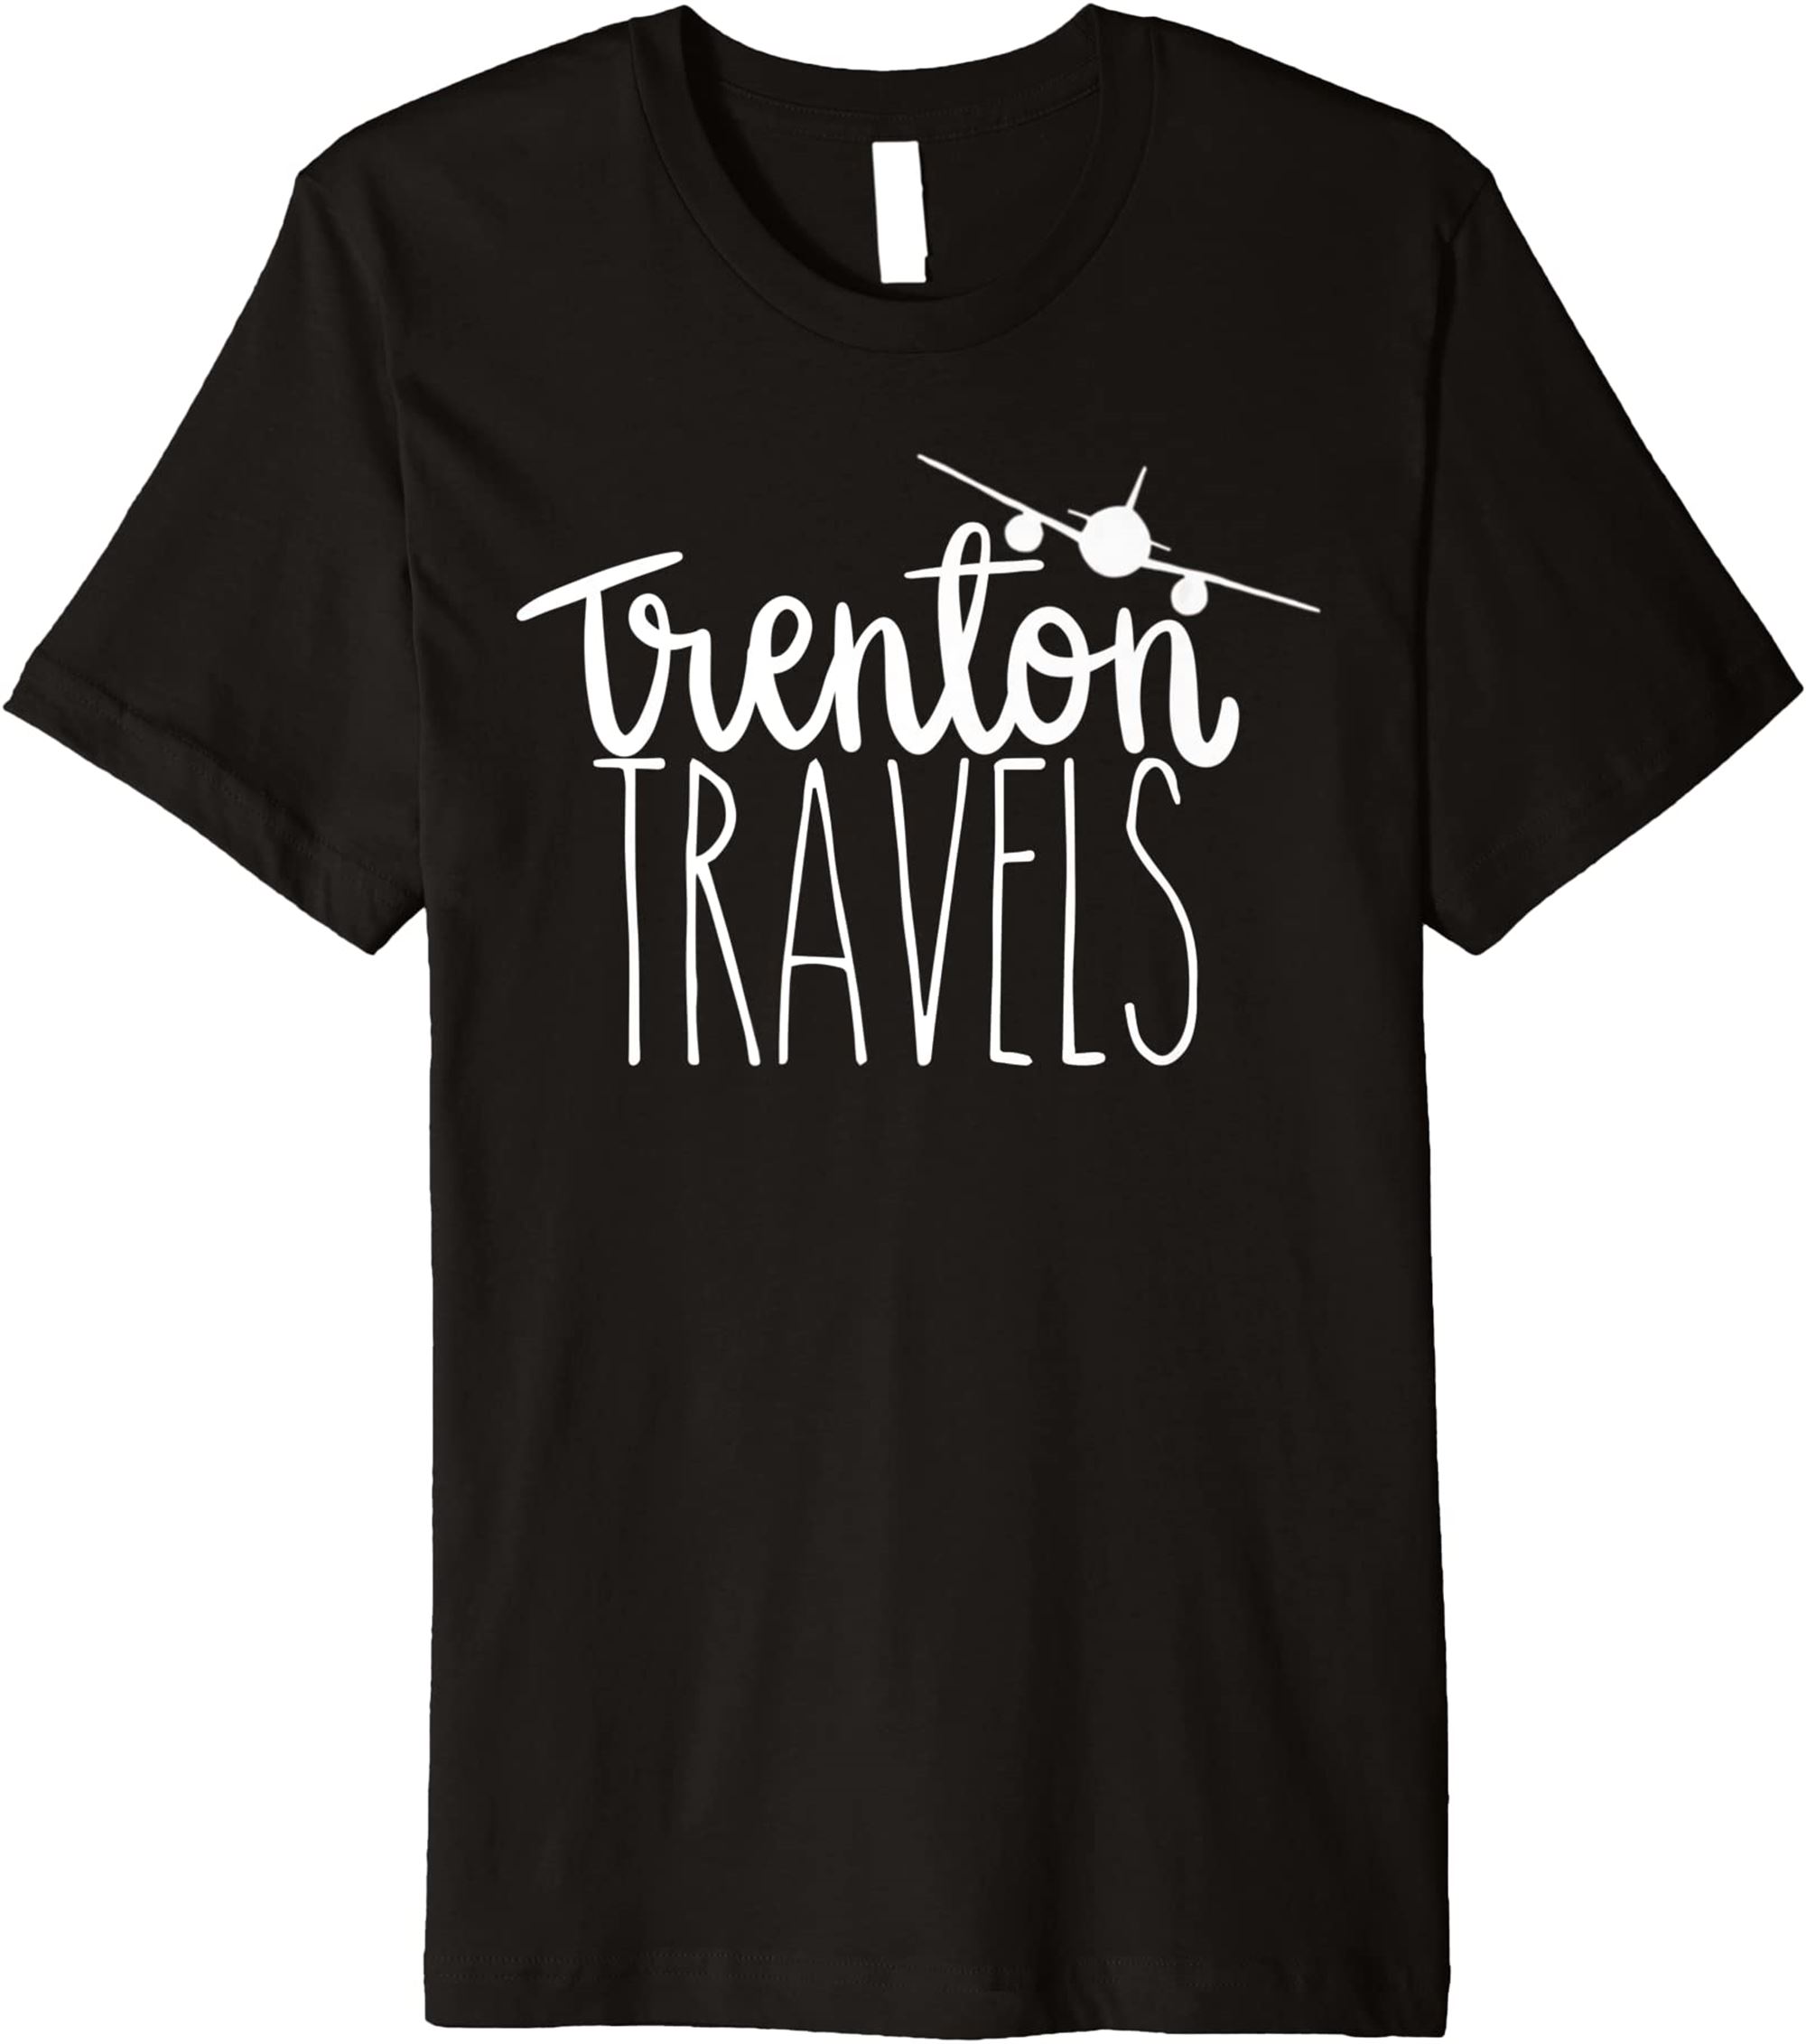 Trenton Travels Premium T-shirt Size Up To 5xl